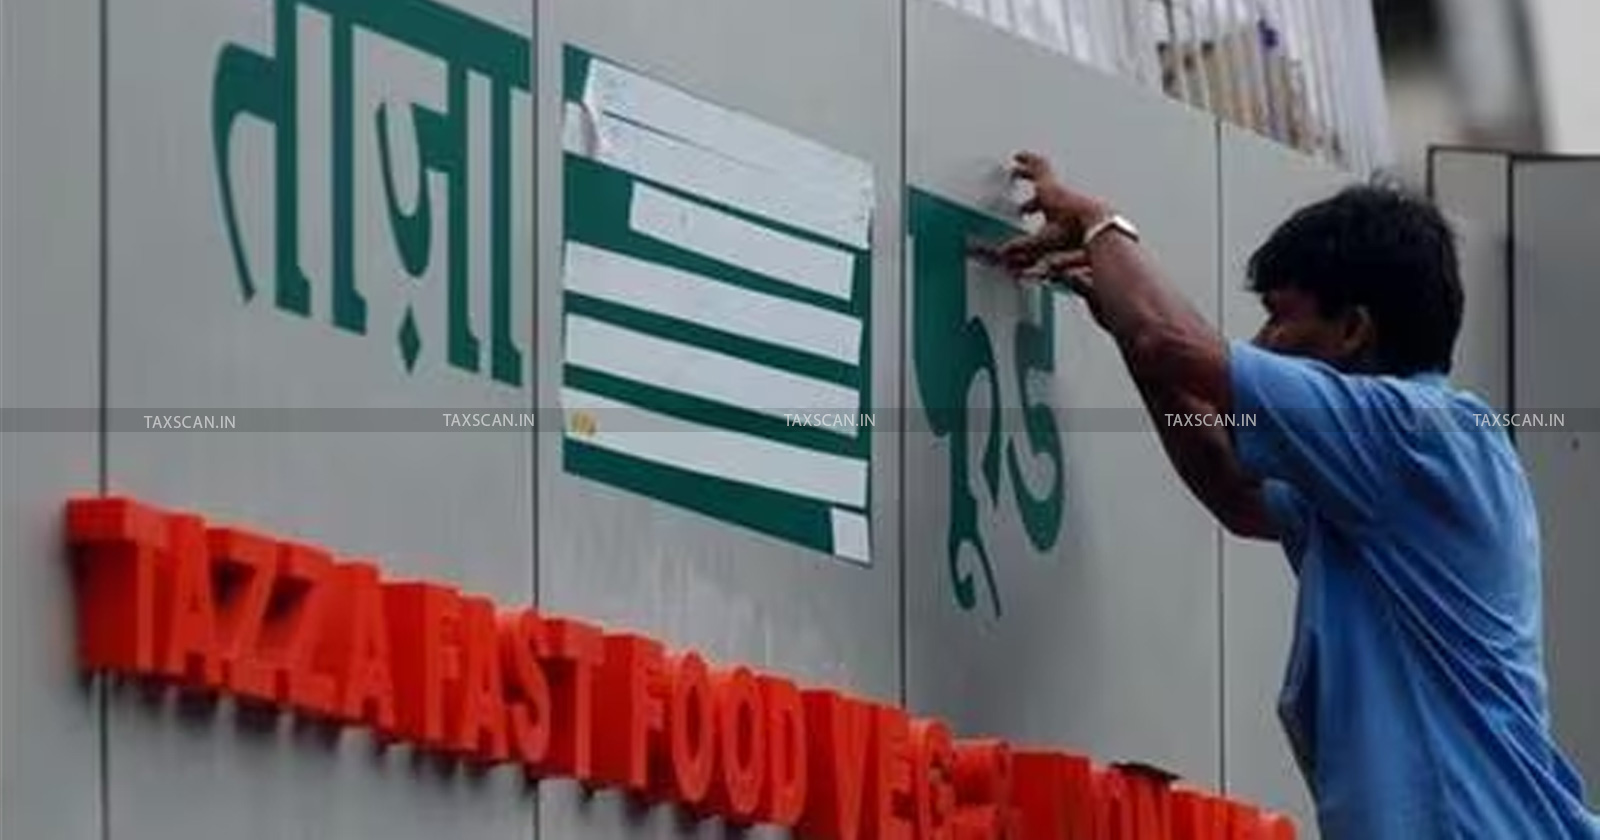 Marathi language enforcement - BMC property tax - marathi signboard rule - Mumbai shop signboards - taxscan